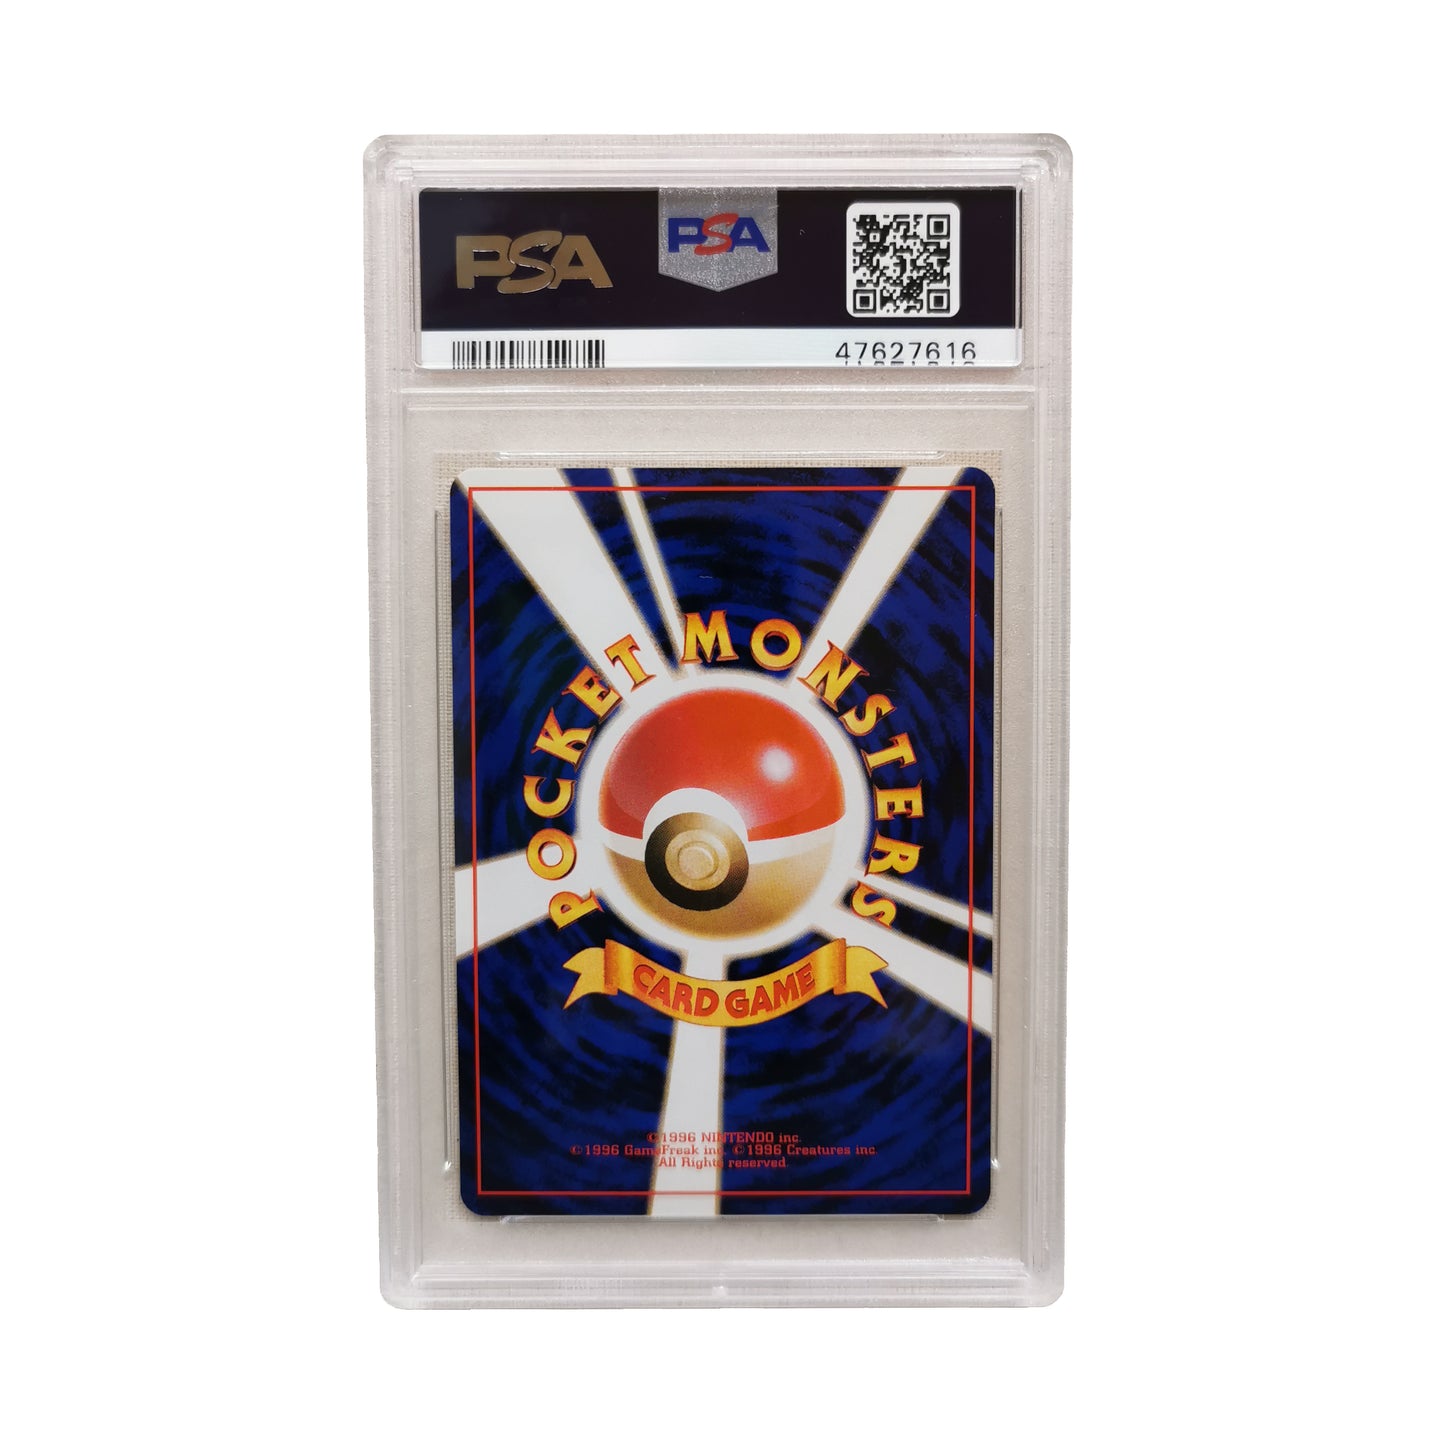 1999 Pokemon Japanese Neo Genesis Murkrow #198 Mint PSA 9